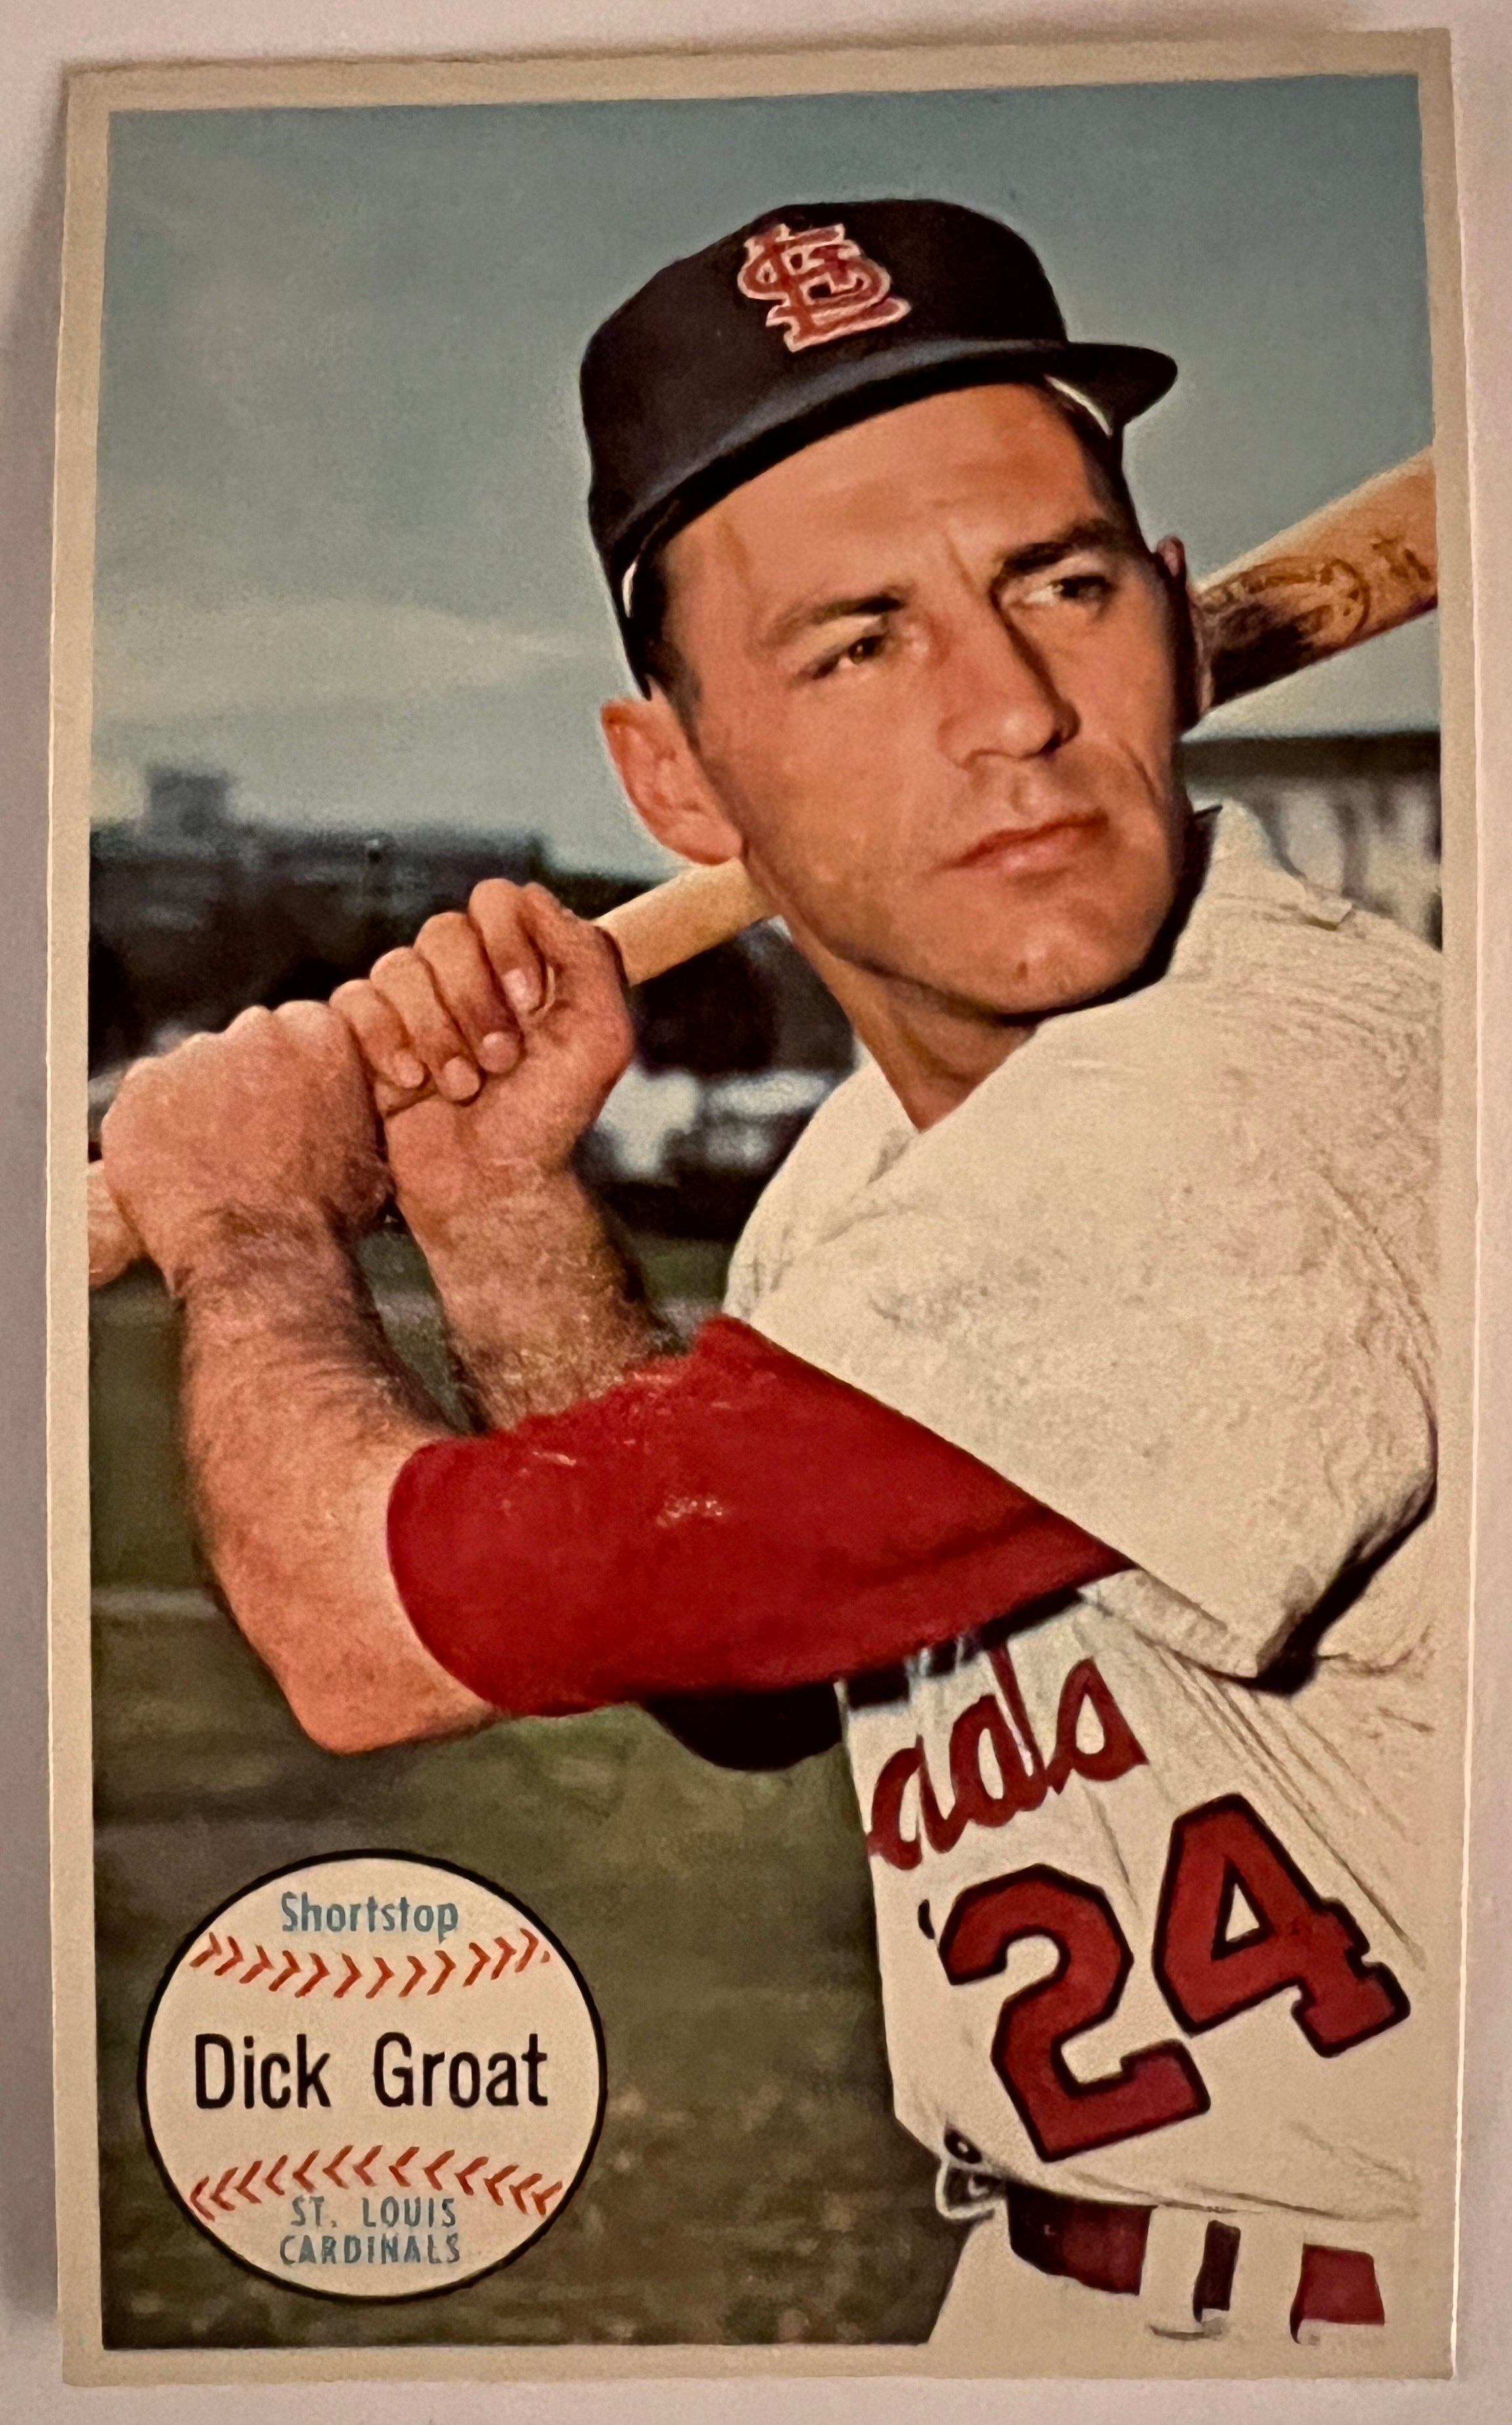 St. Louis Cardinals Dick Groat baseball trading card